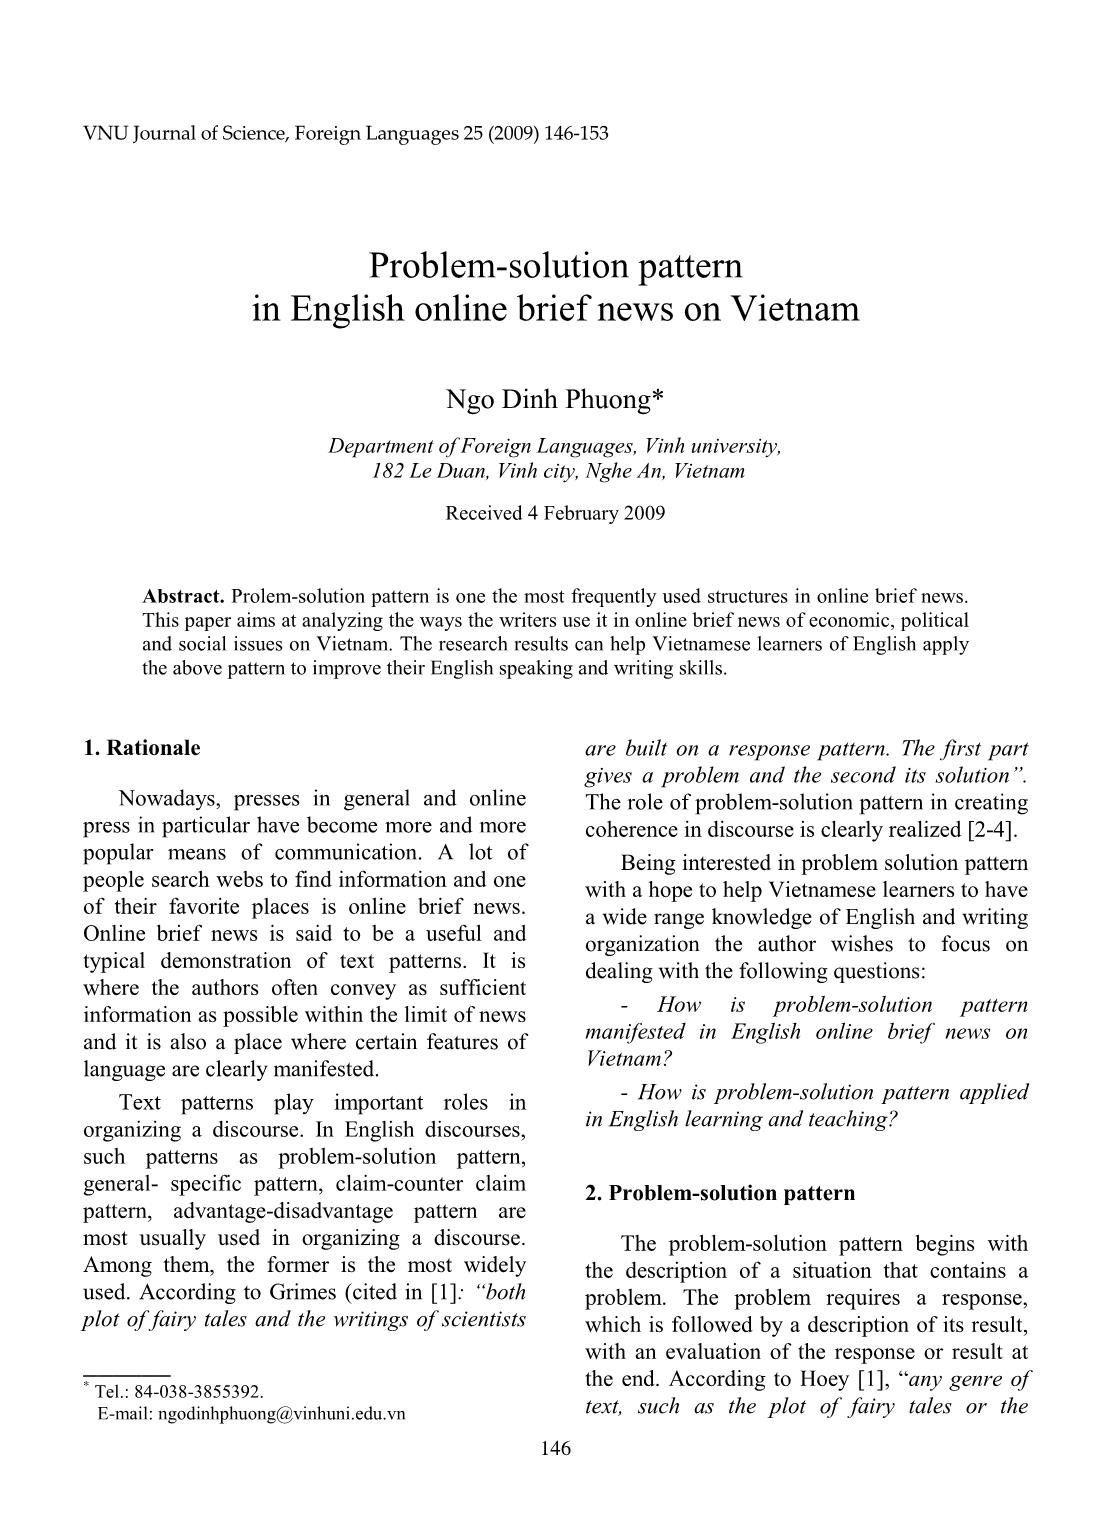 Problem - Solution pattern in English online brief news on Vietnam trang 1